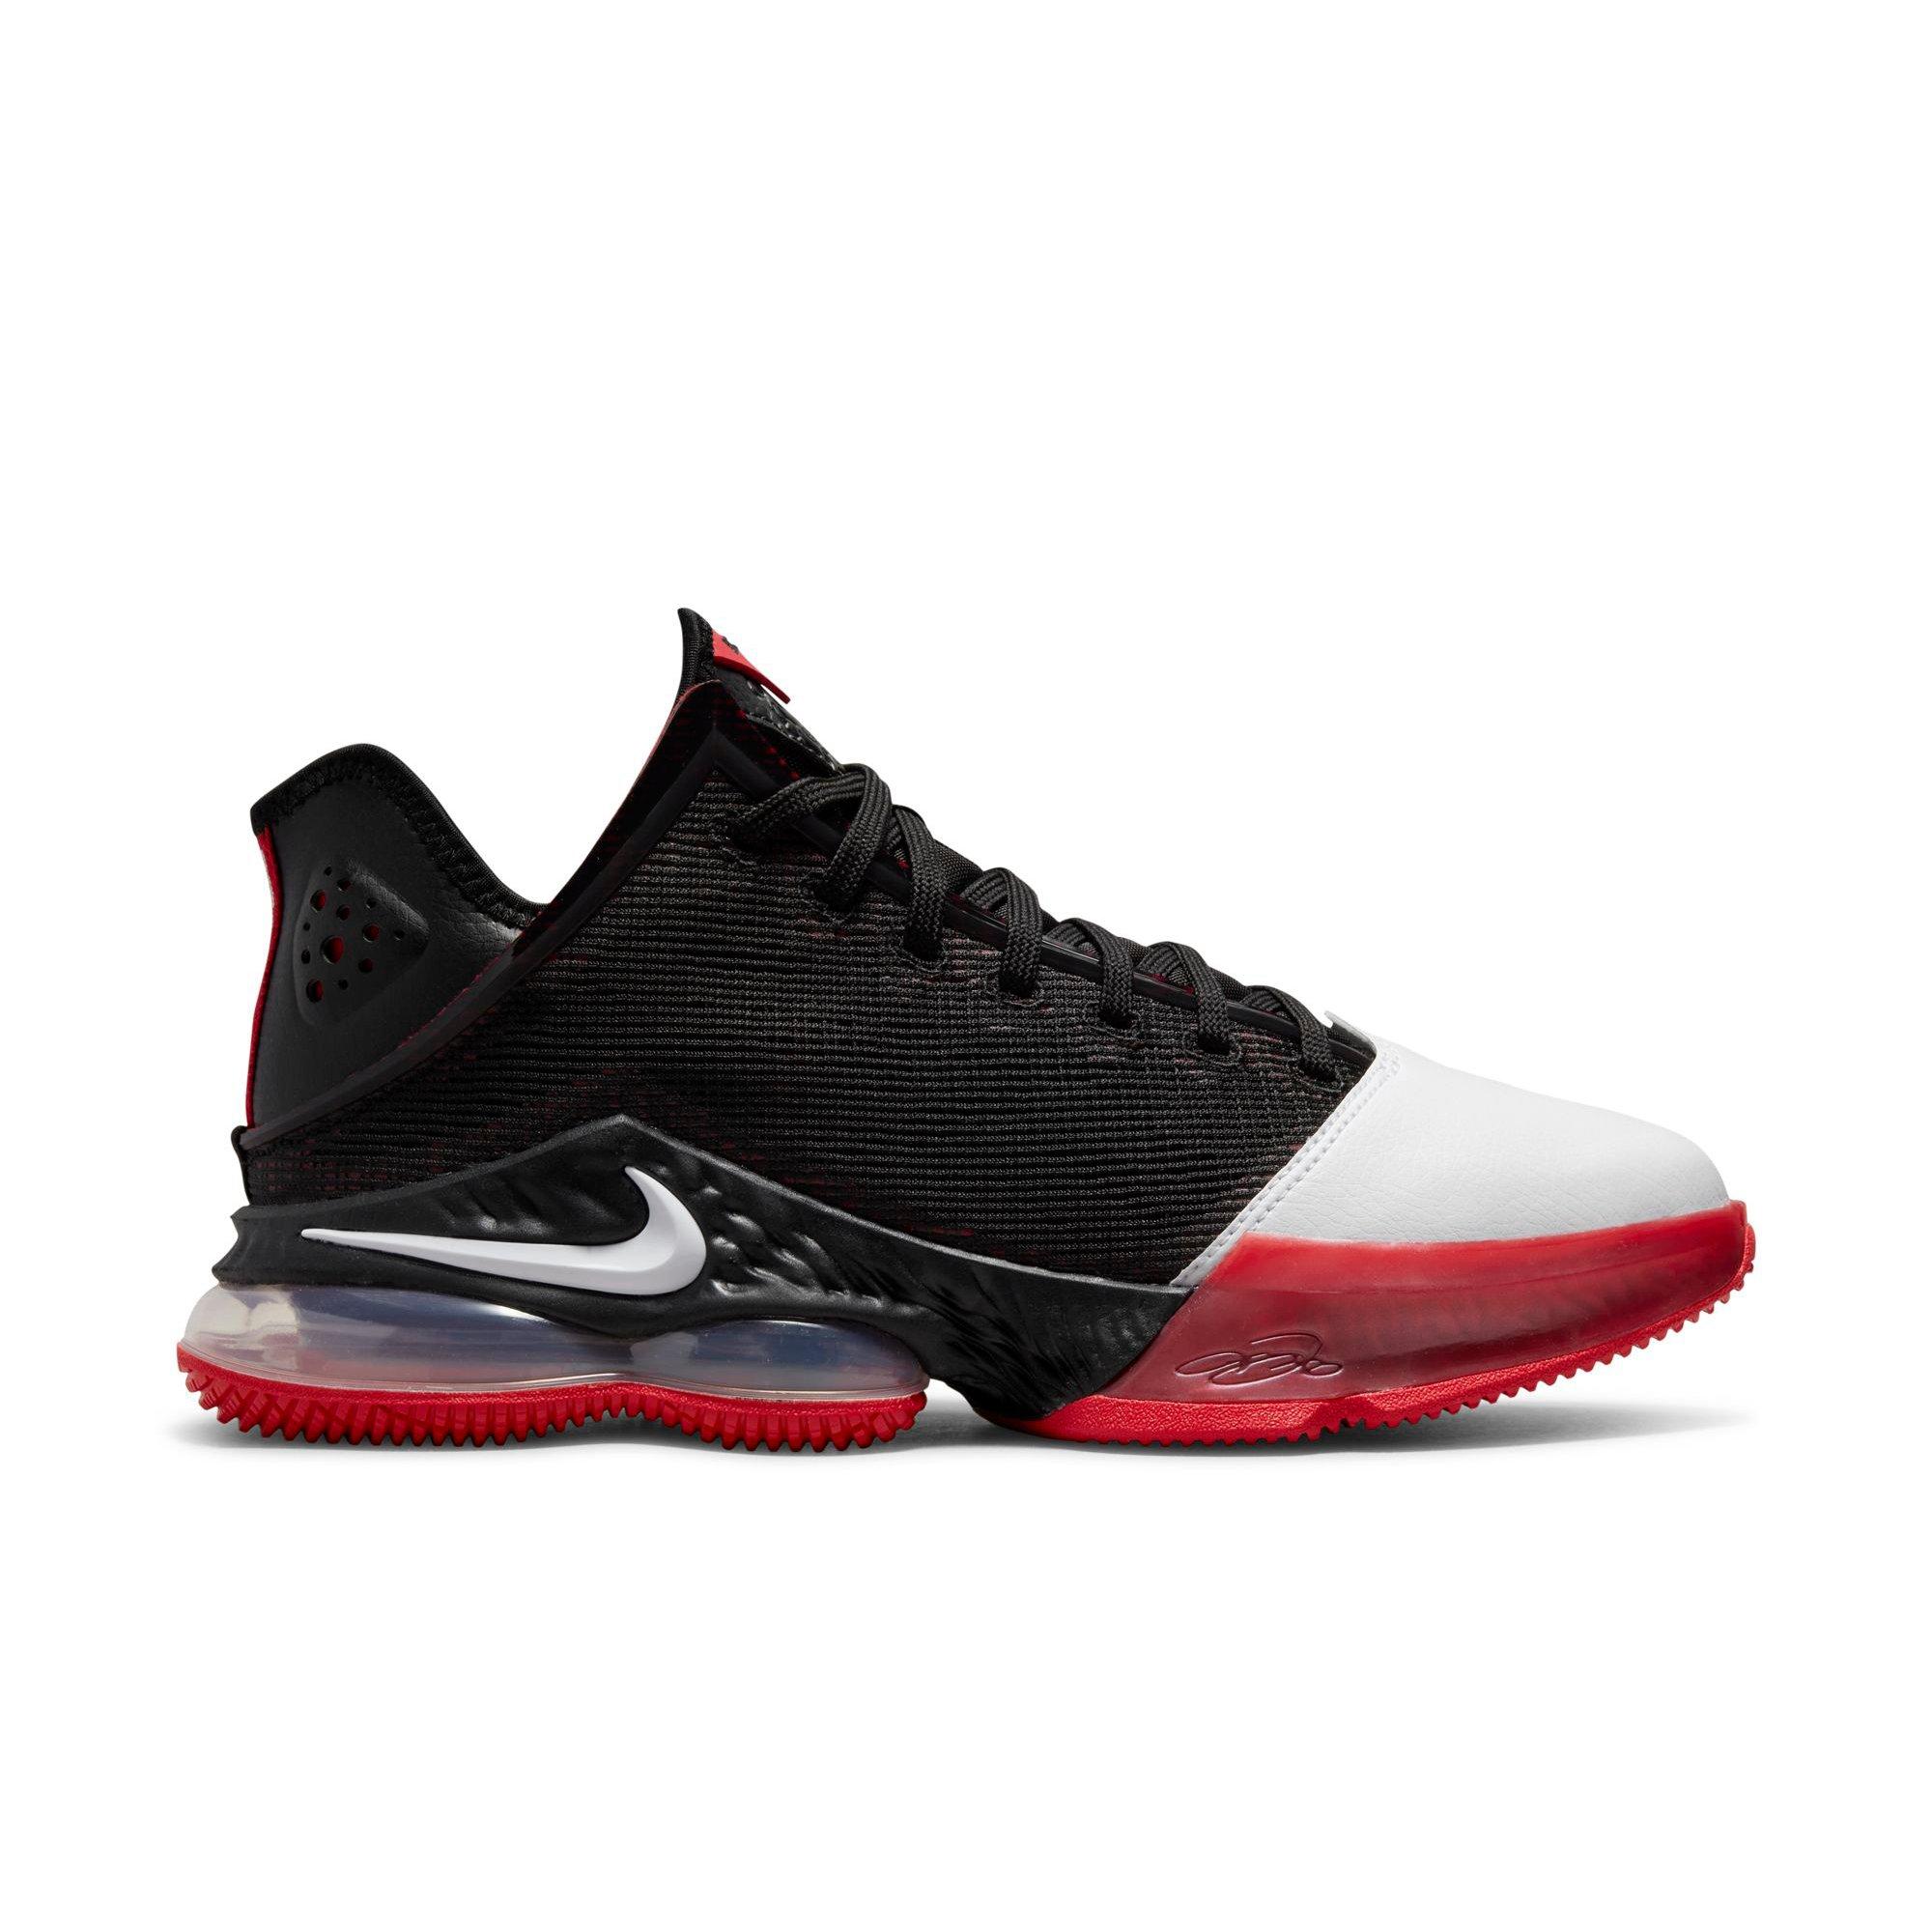 19 Low "Black/White/University Red" Basketball Shoe